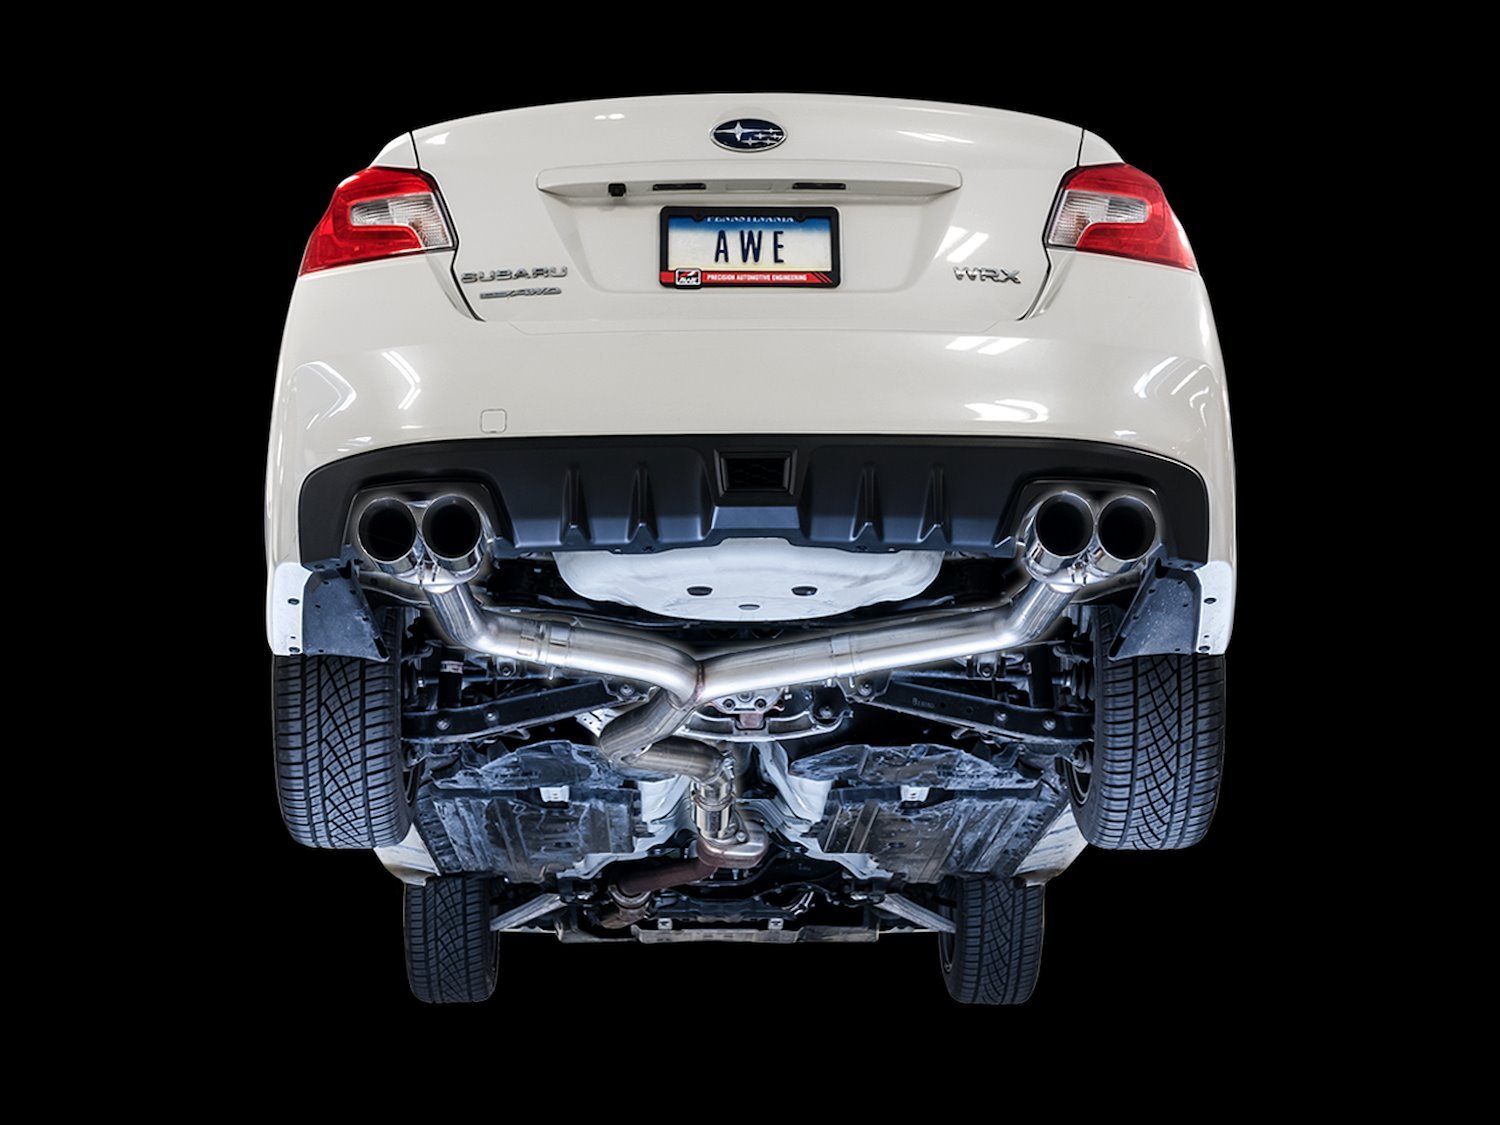 AWE Track Edition Exhaust for VA / GV WRX / STI Sedan - Chrome Silver Quad Tips (102mm)